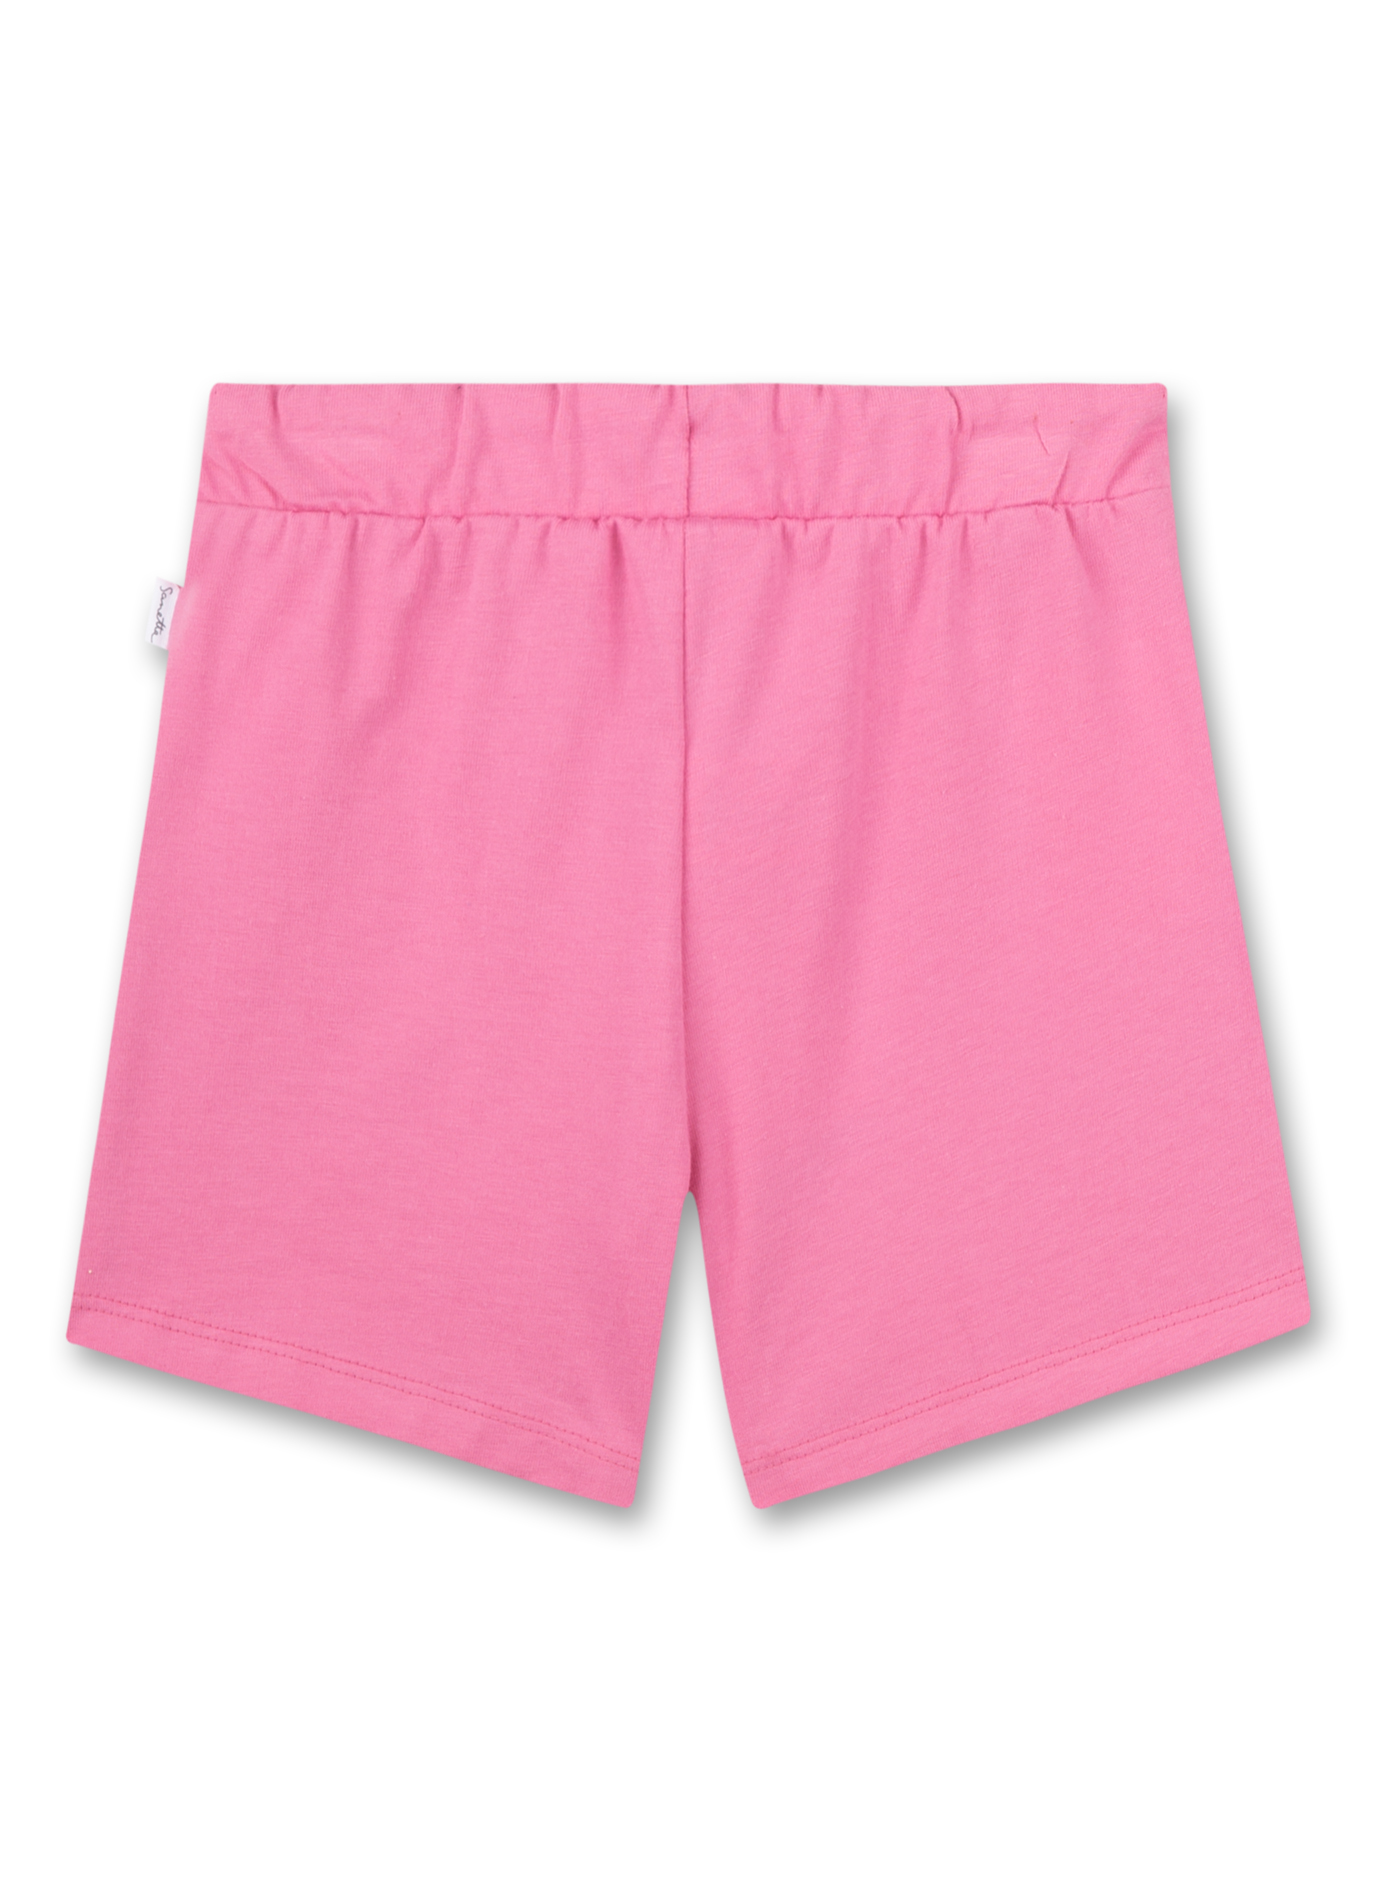 Mädchen-Shorts Pink